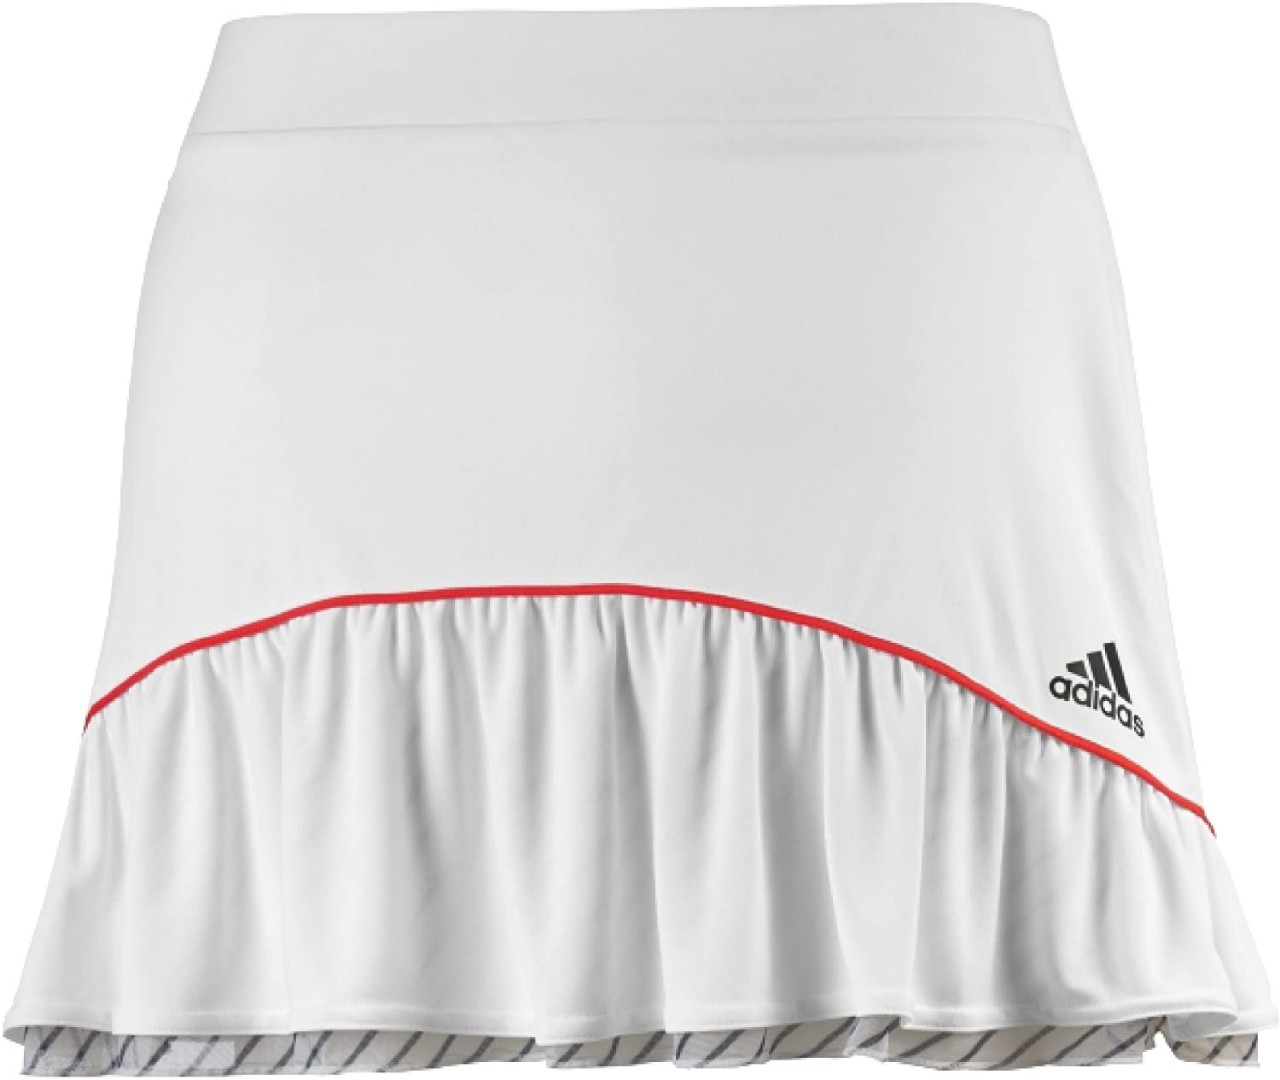 Белая юбка Adidas спортивного стиля